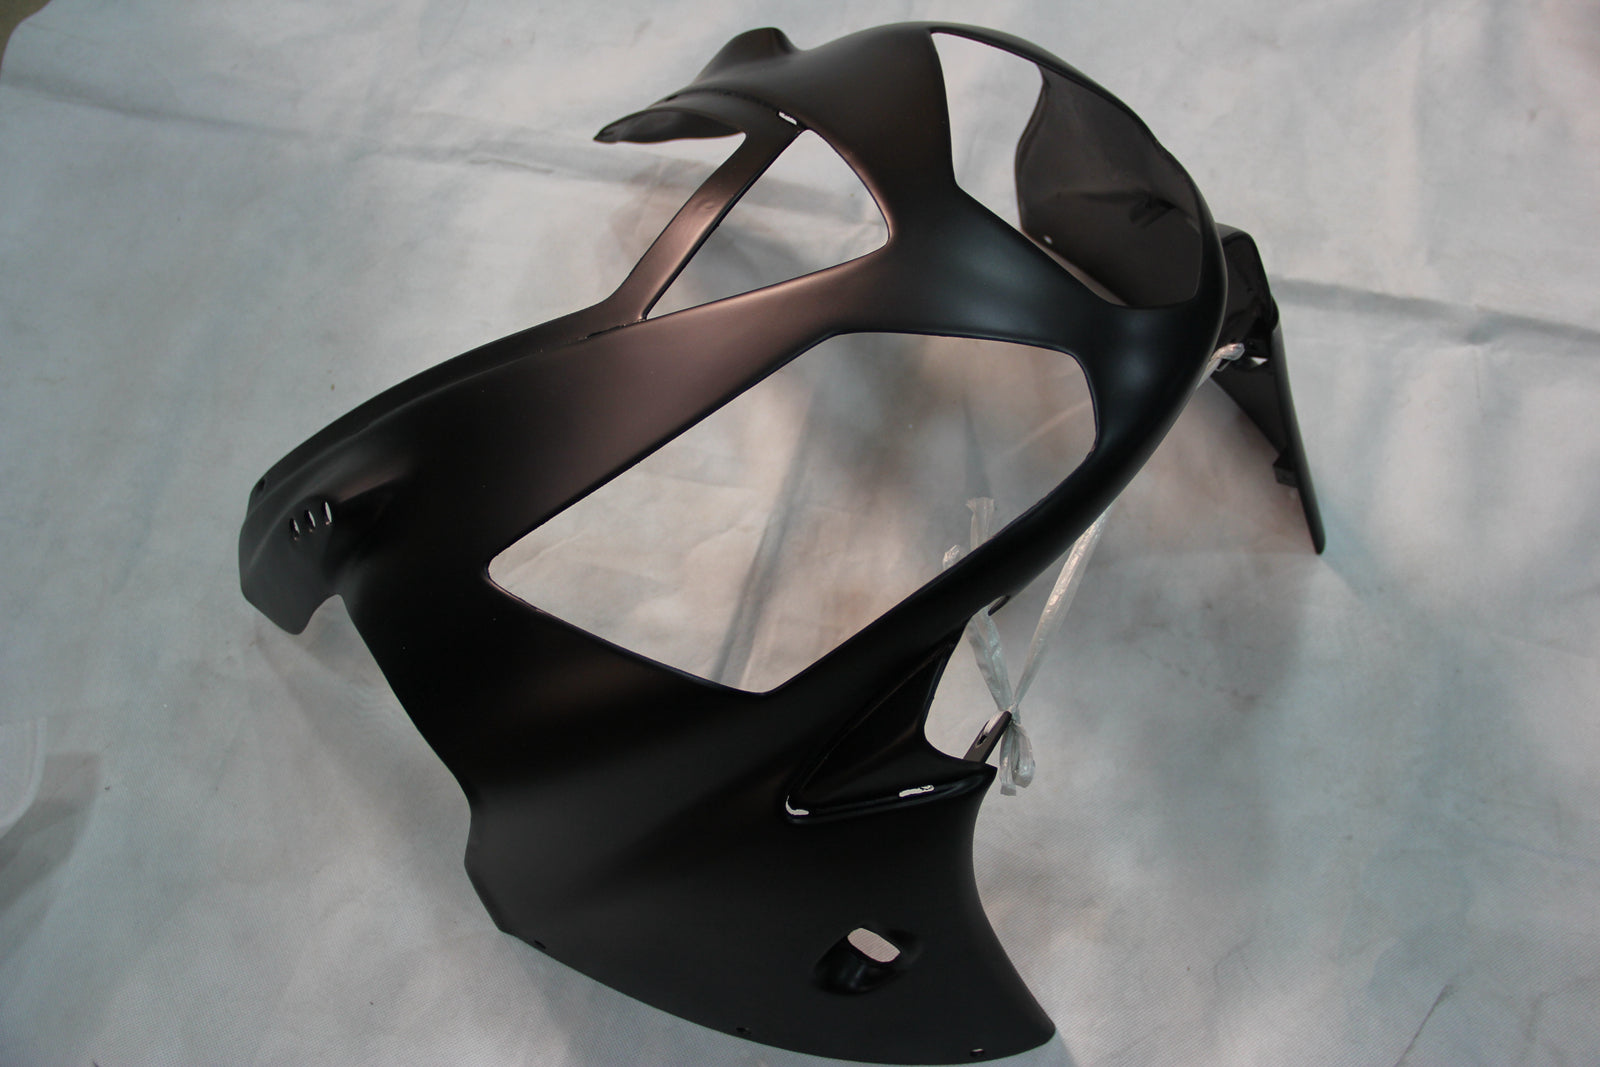 for-ninja-zx12r-2002-2004-black-bodywork-fairing-abs-injection-molded-plastics-set-6